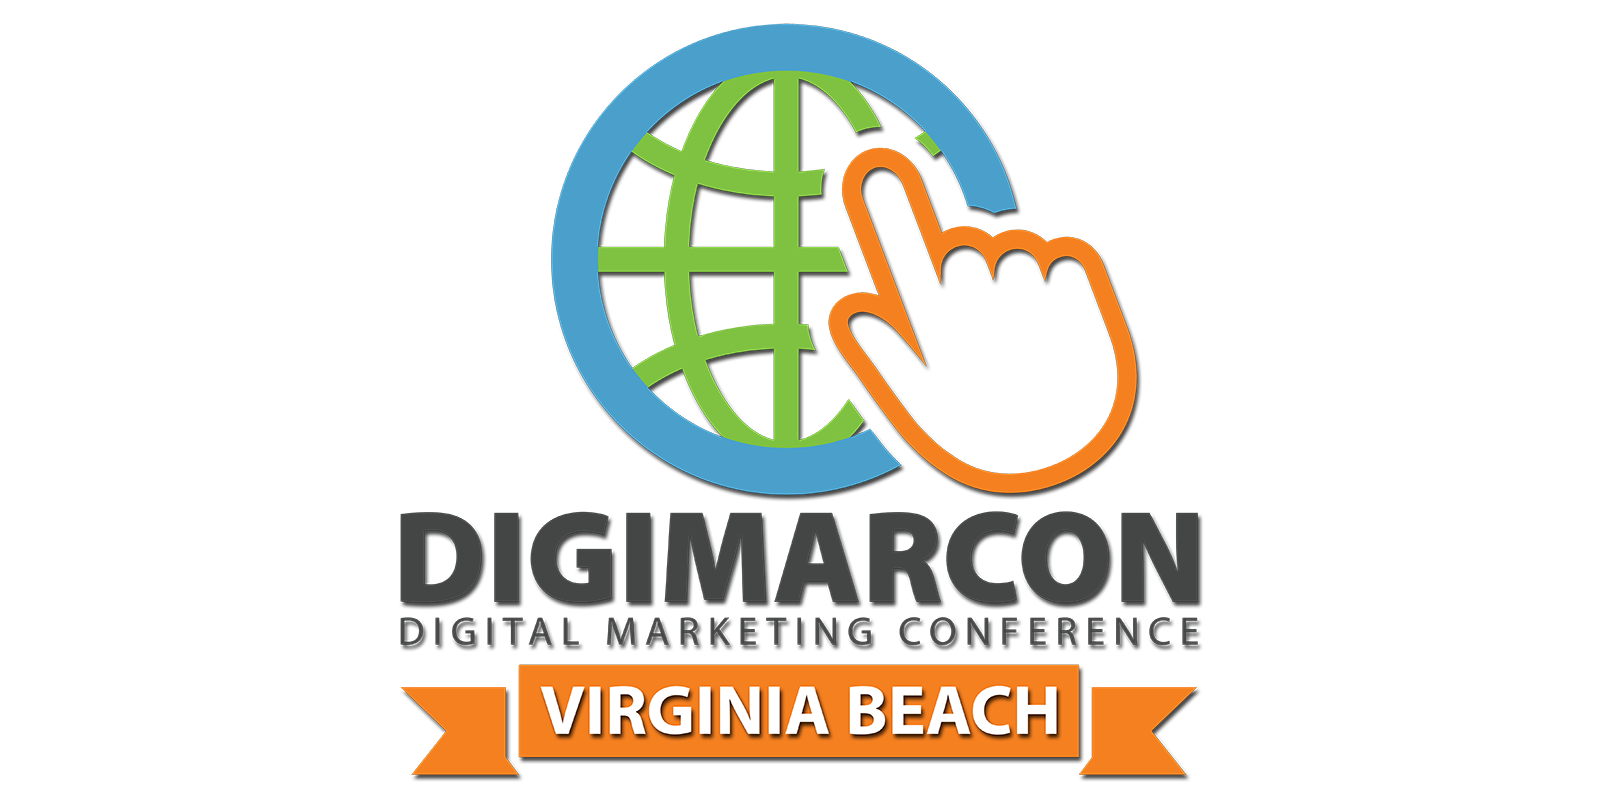 Virginia Beach Digital Marketing Conference